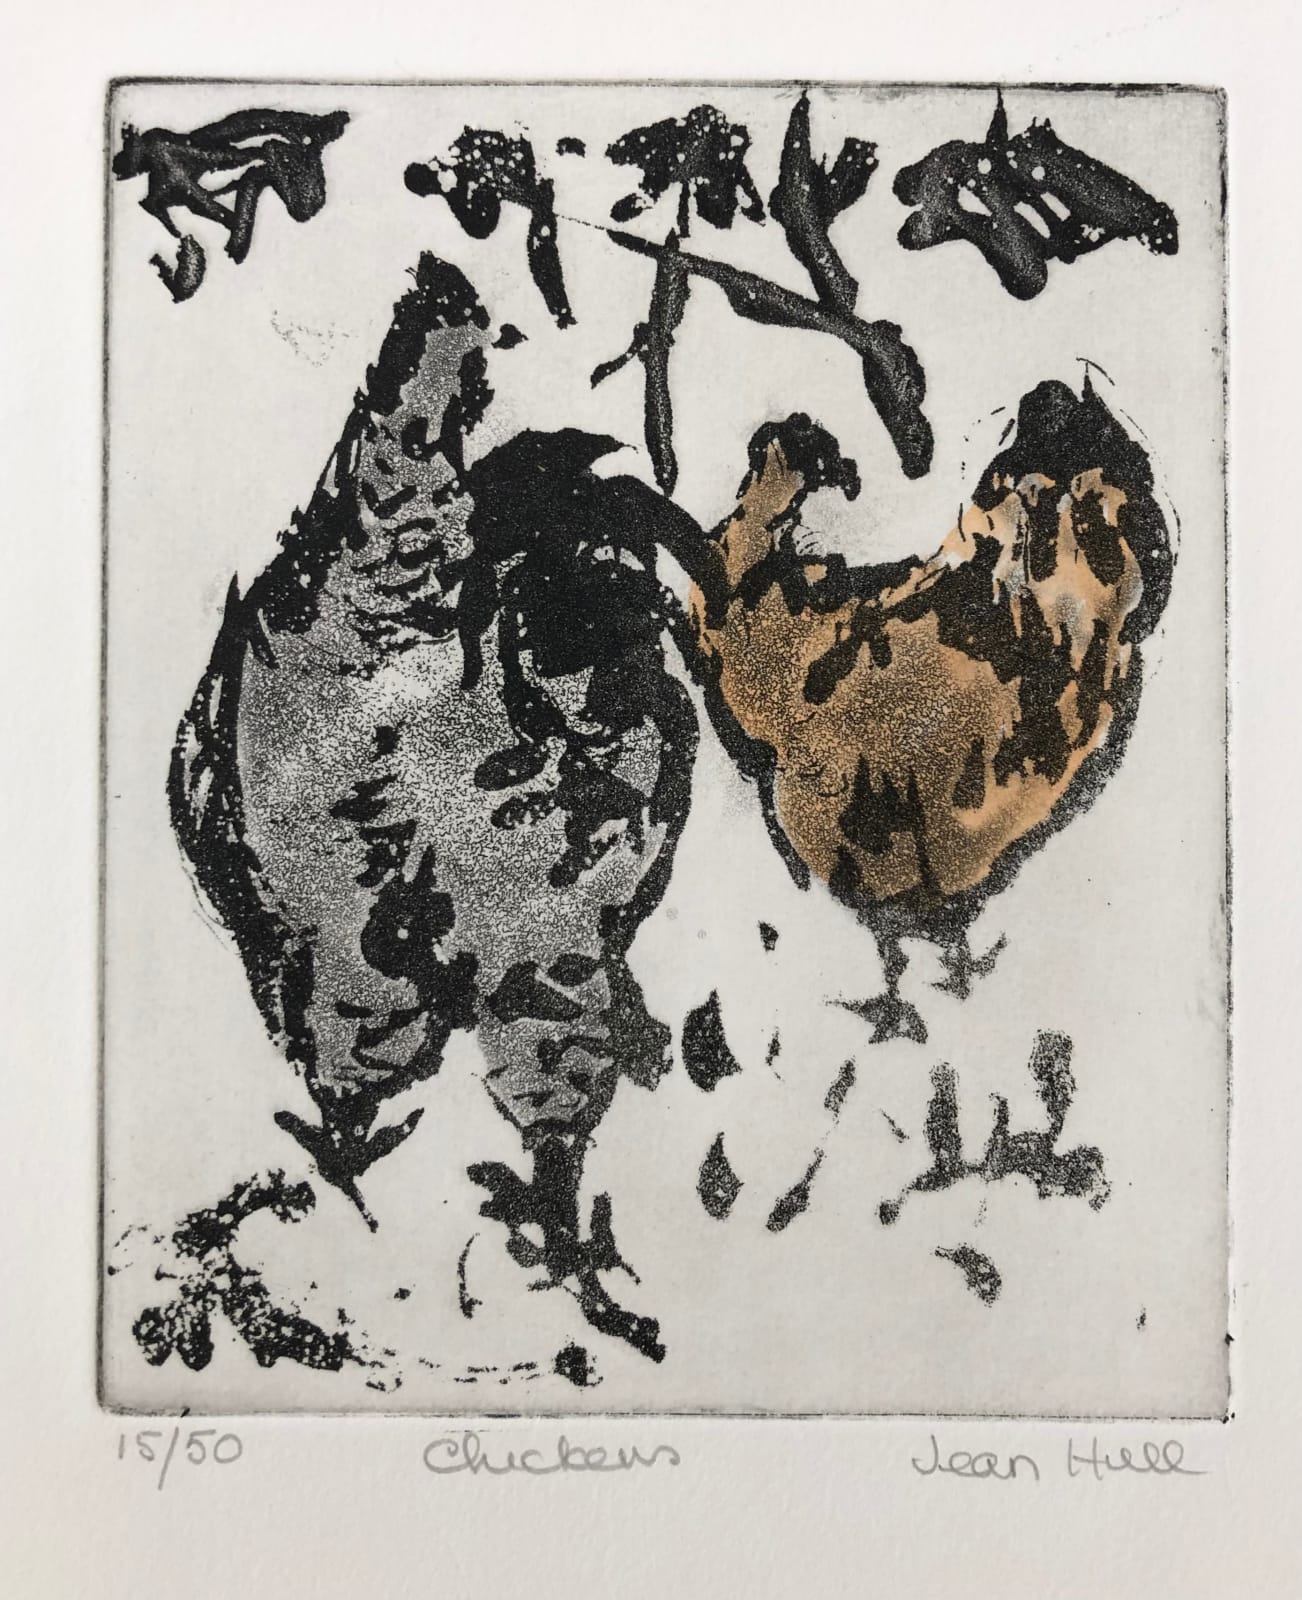 Jean Hull, Chickens